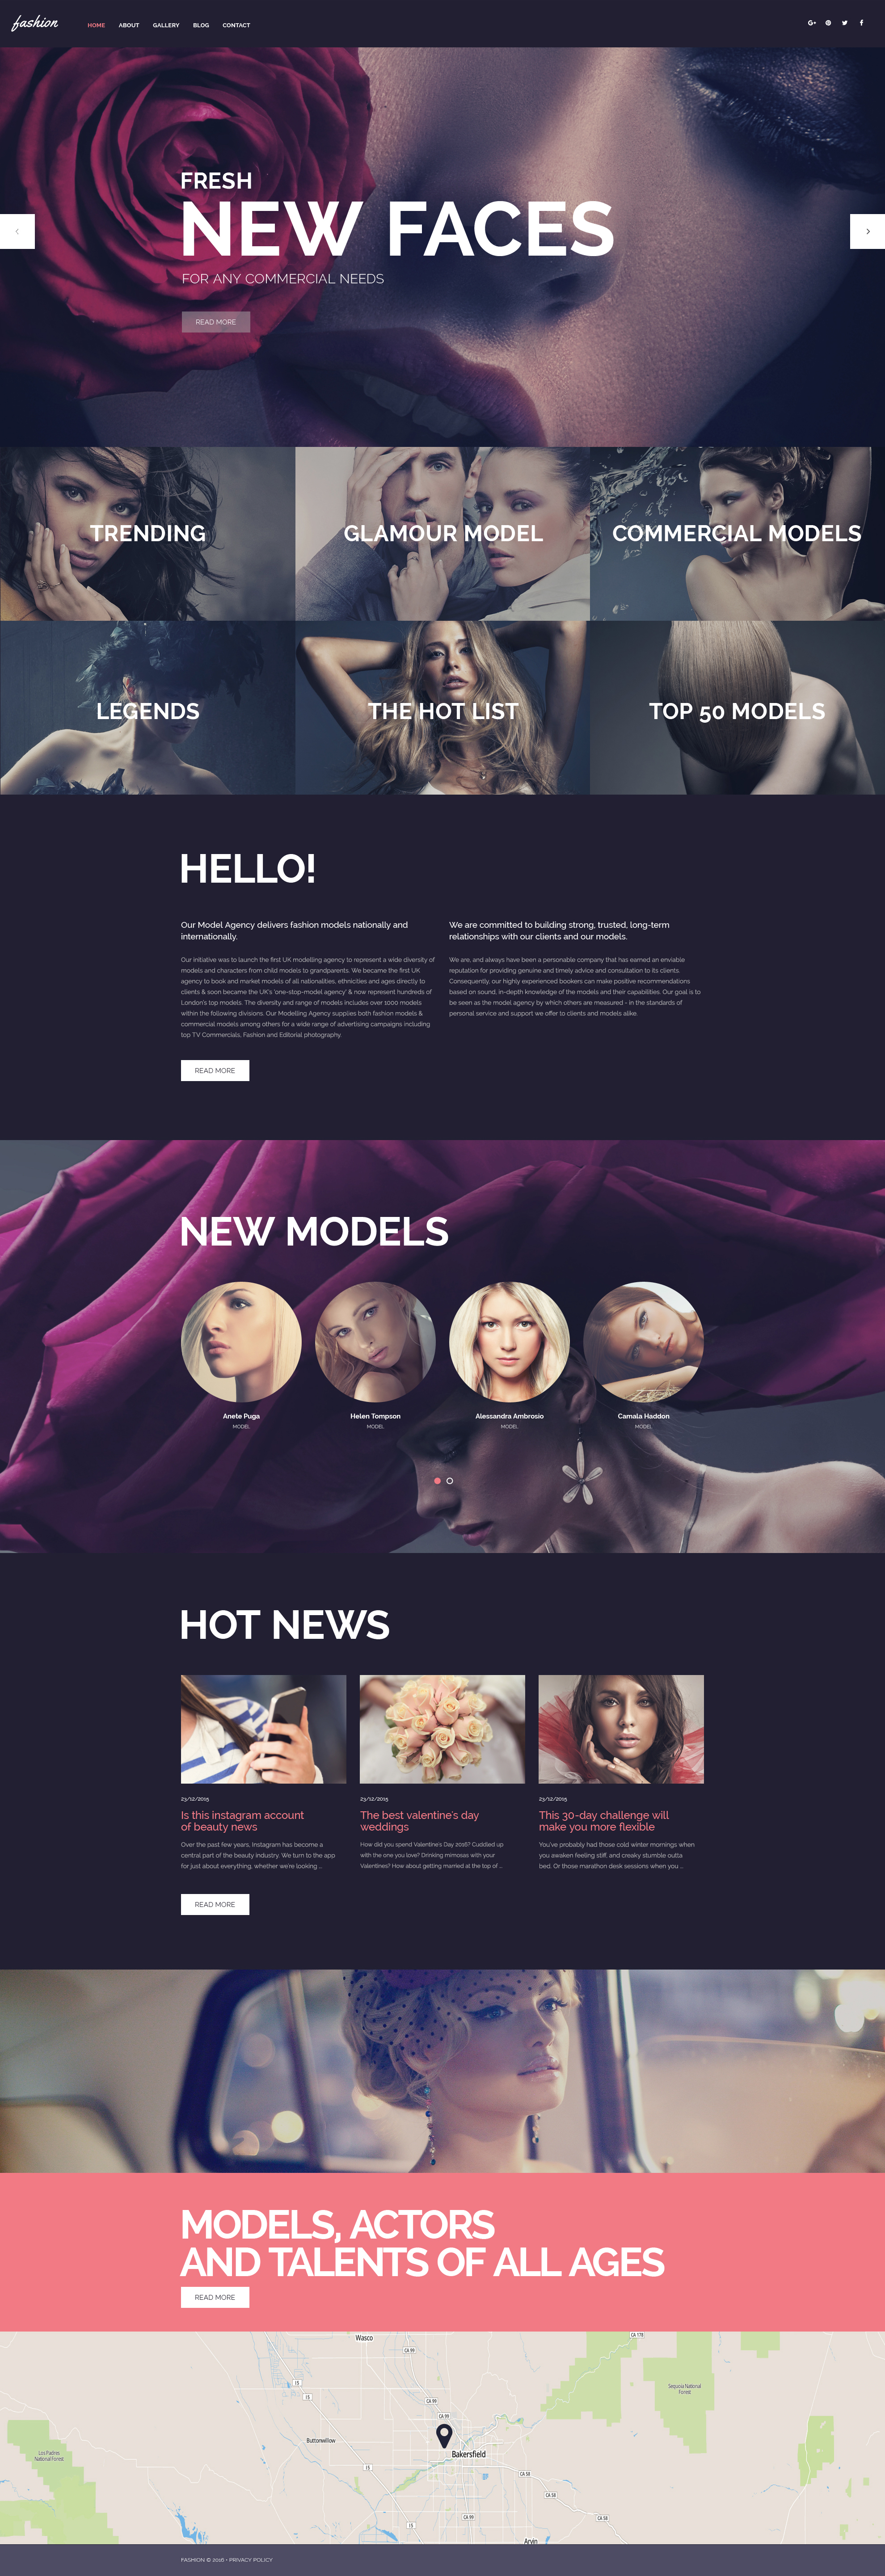 Astics - High Fashion Portal WordPress Theme